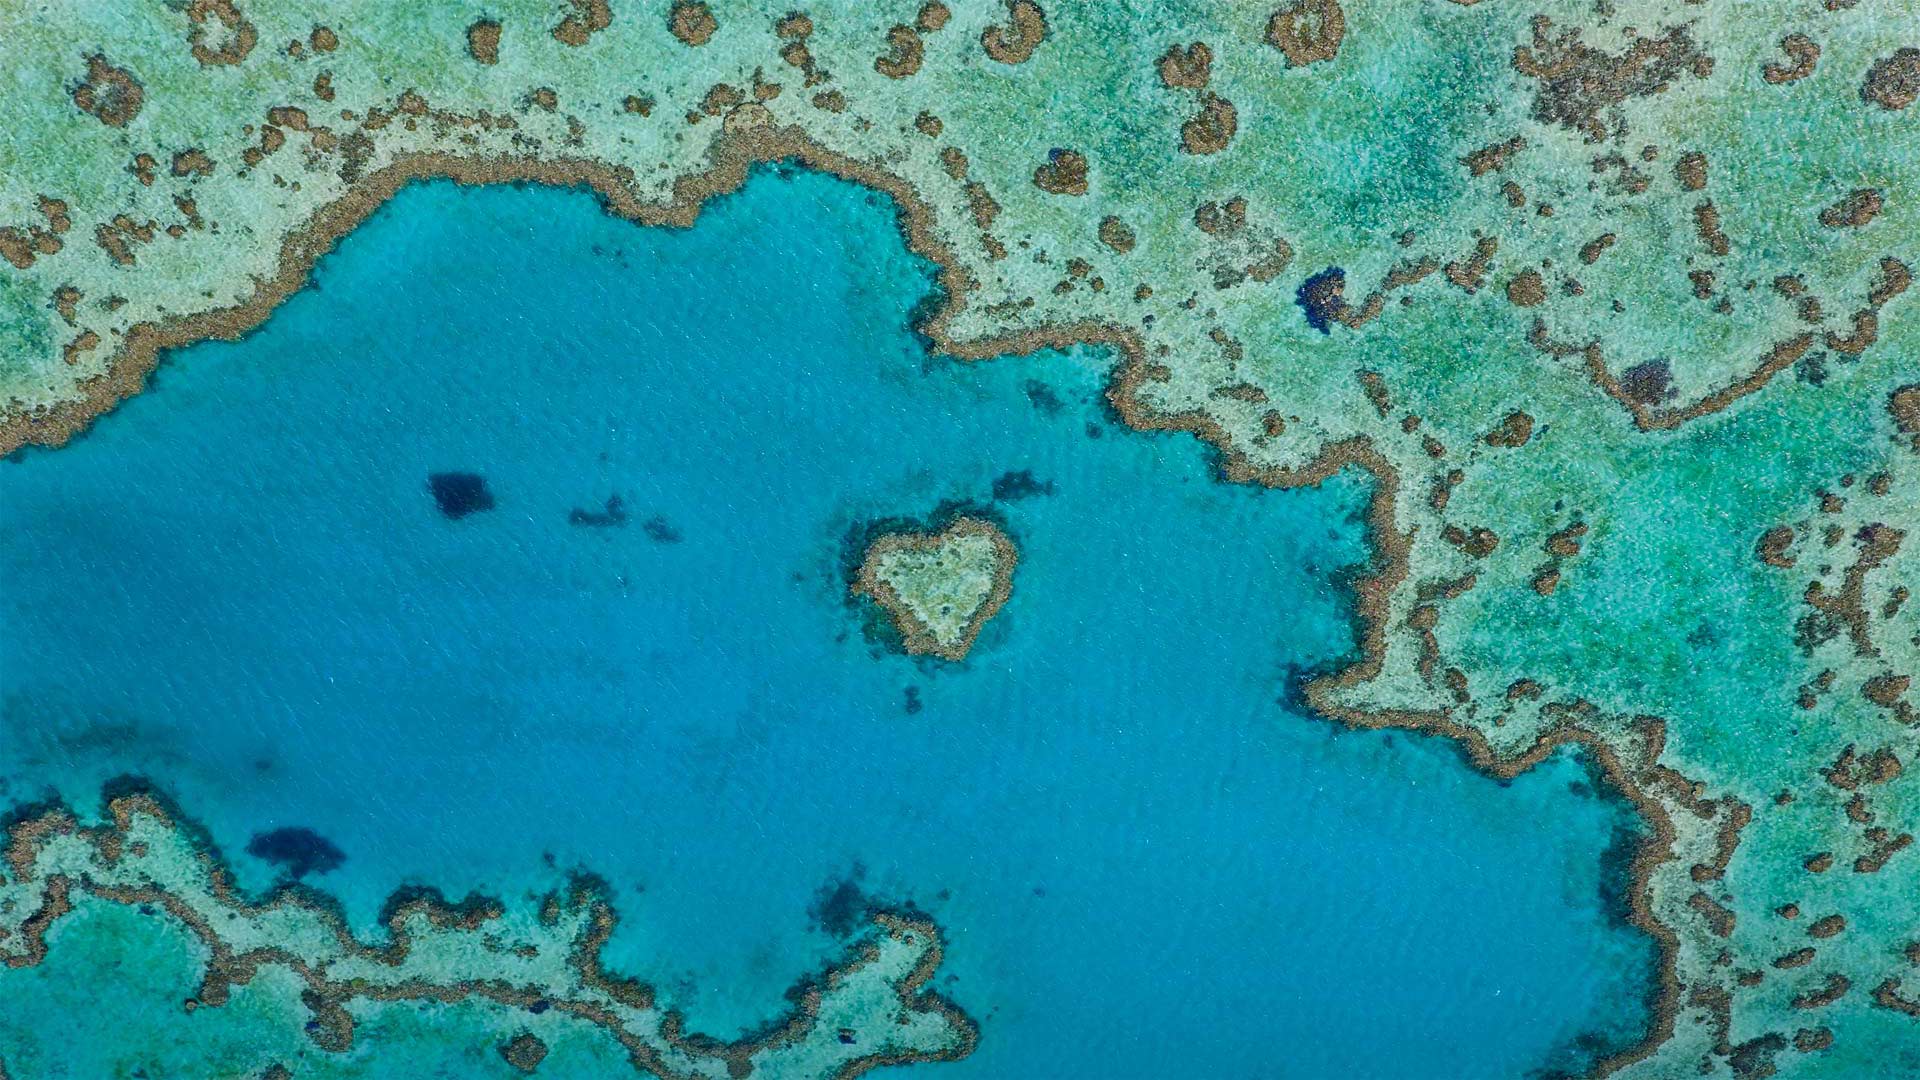 Heart Reef, part of the Great Barrier Reef off Queensland, Australia - Peter Adams/Offset by Shutterstock)